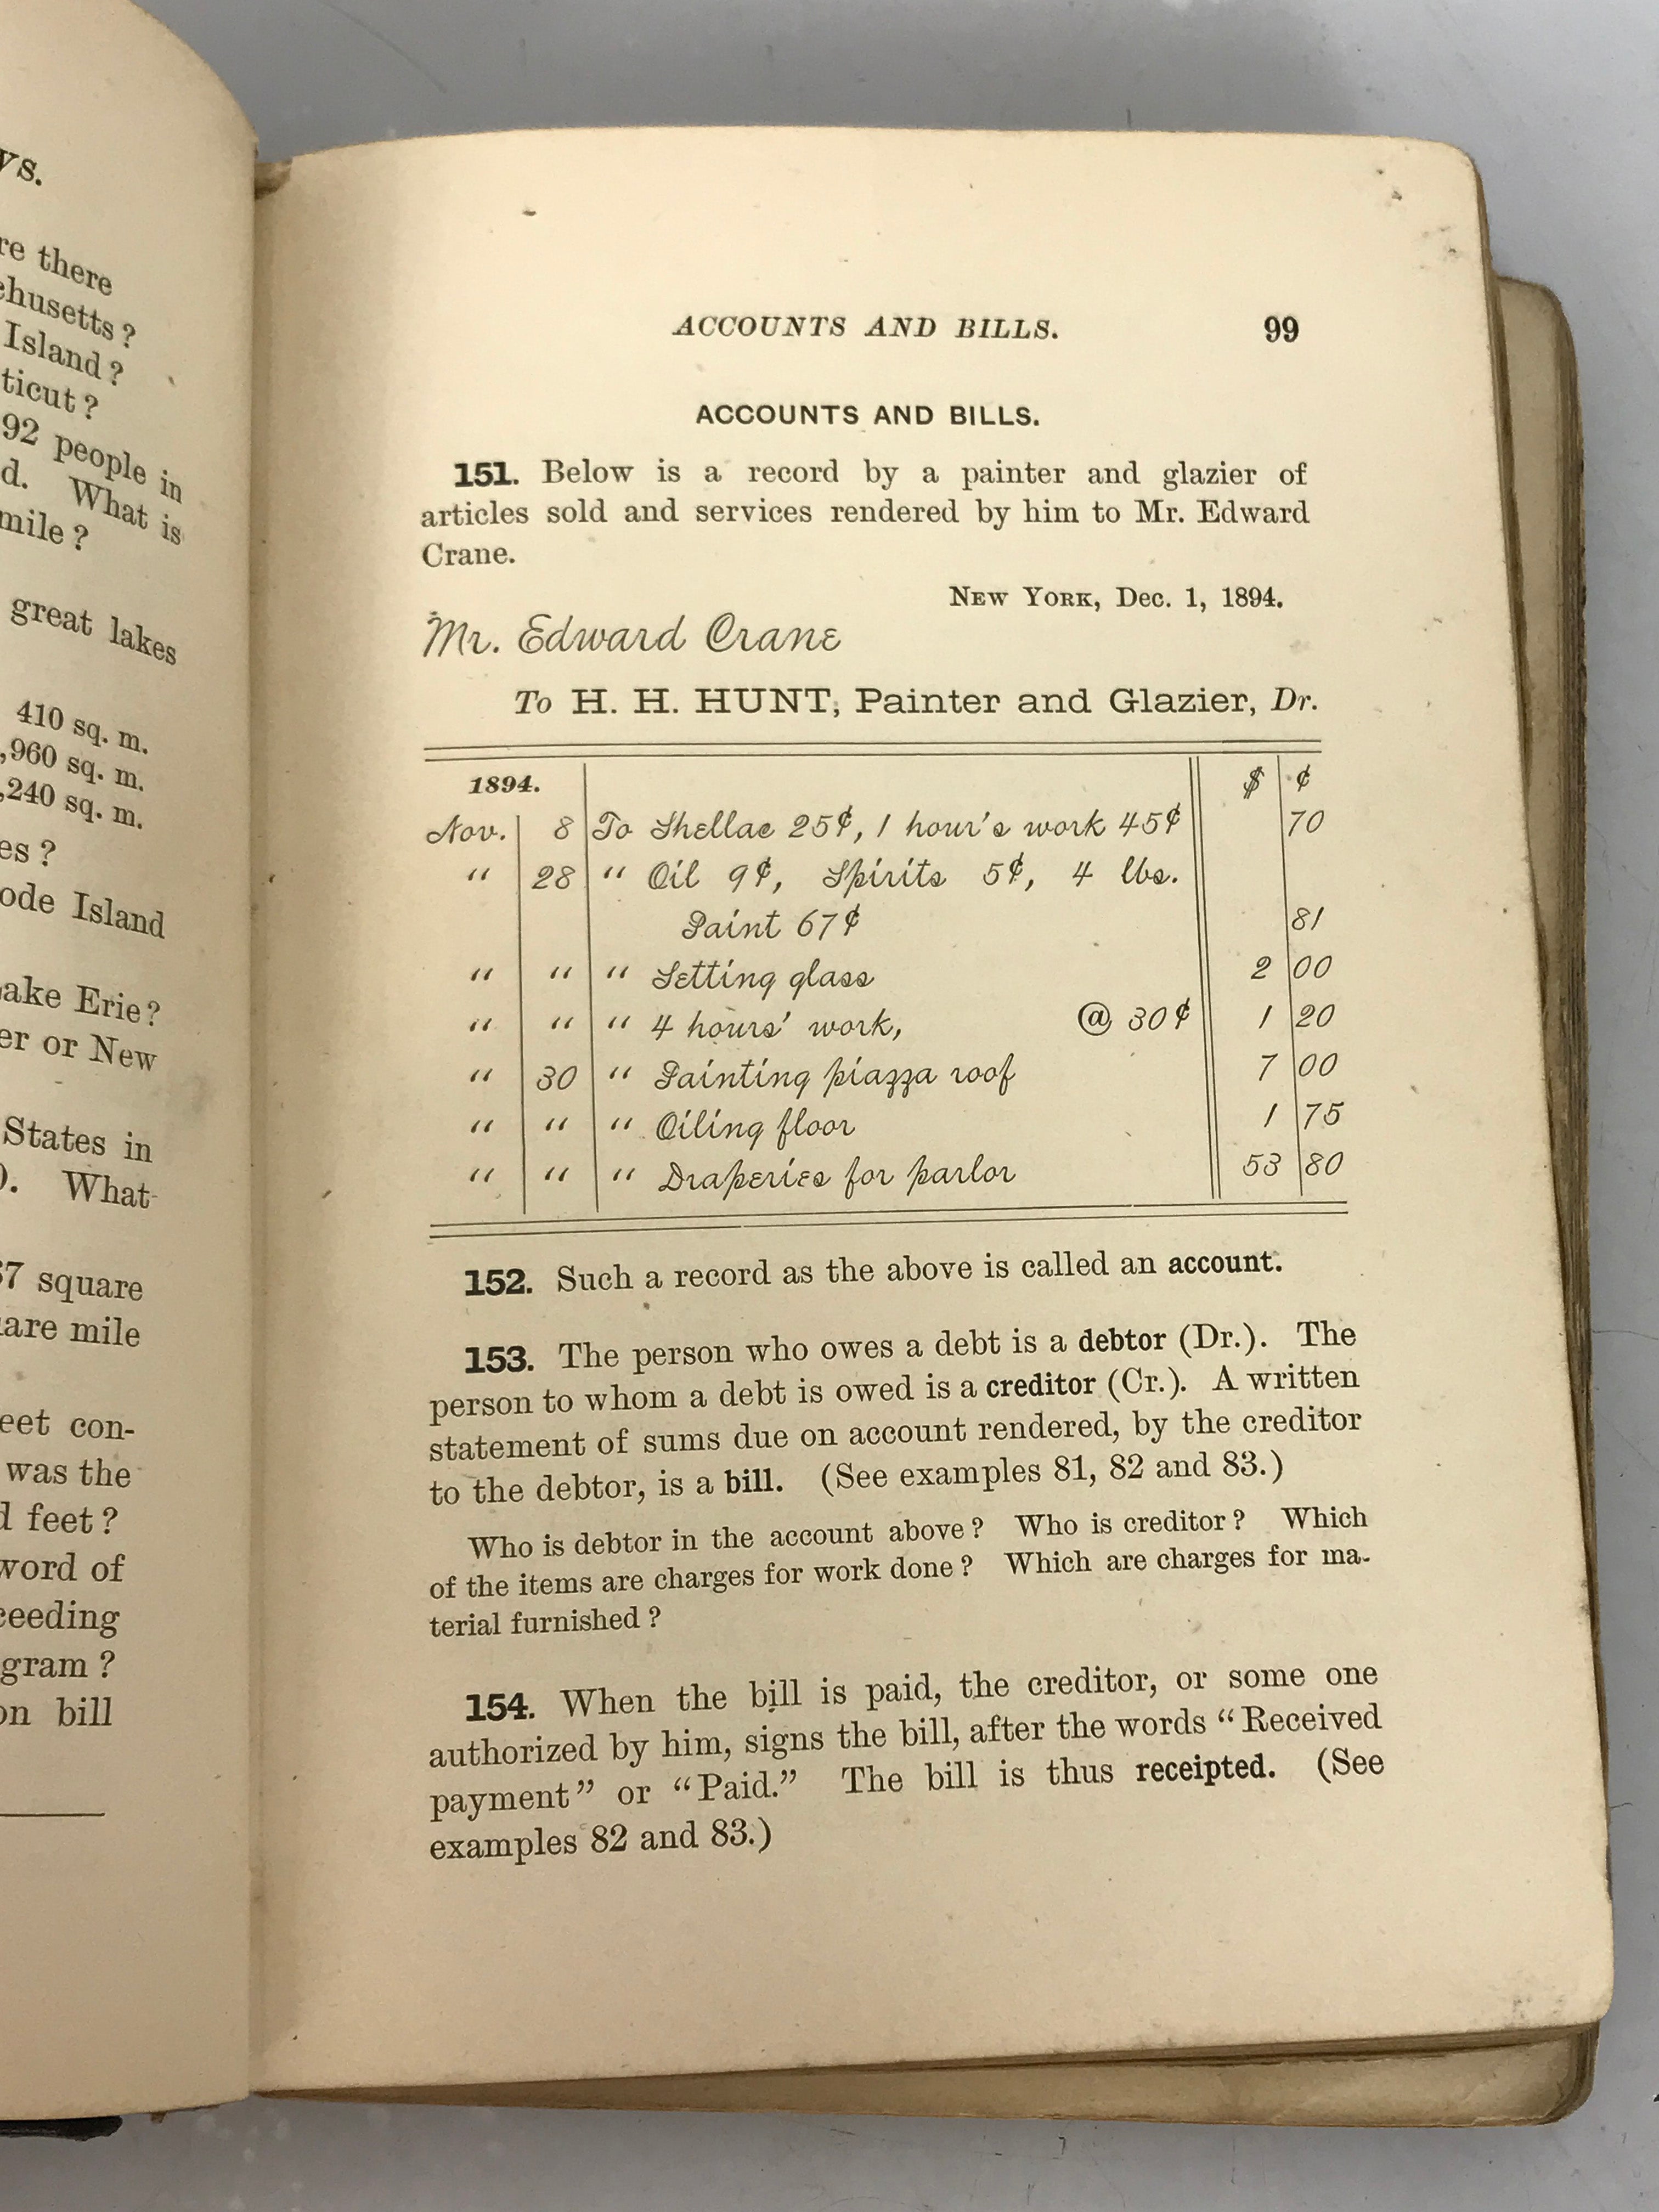 New Franklin Arithmetic Second Book Edwin Seaver 1895 HC